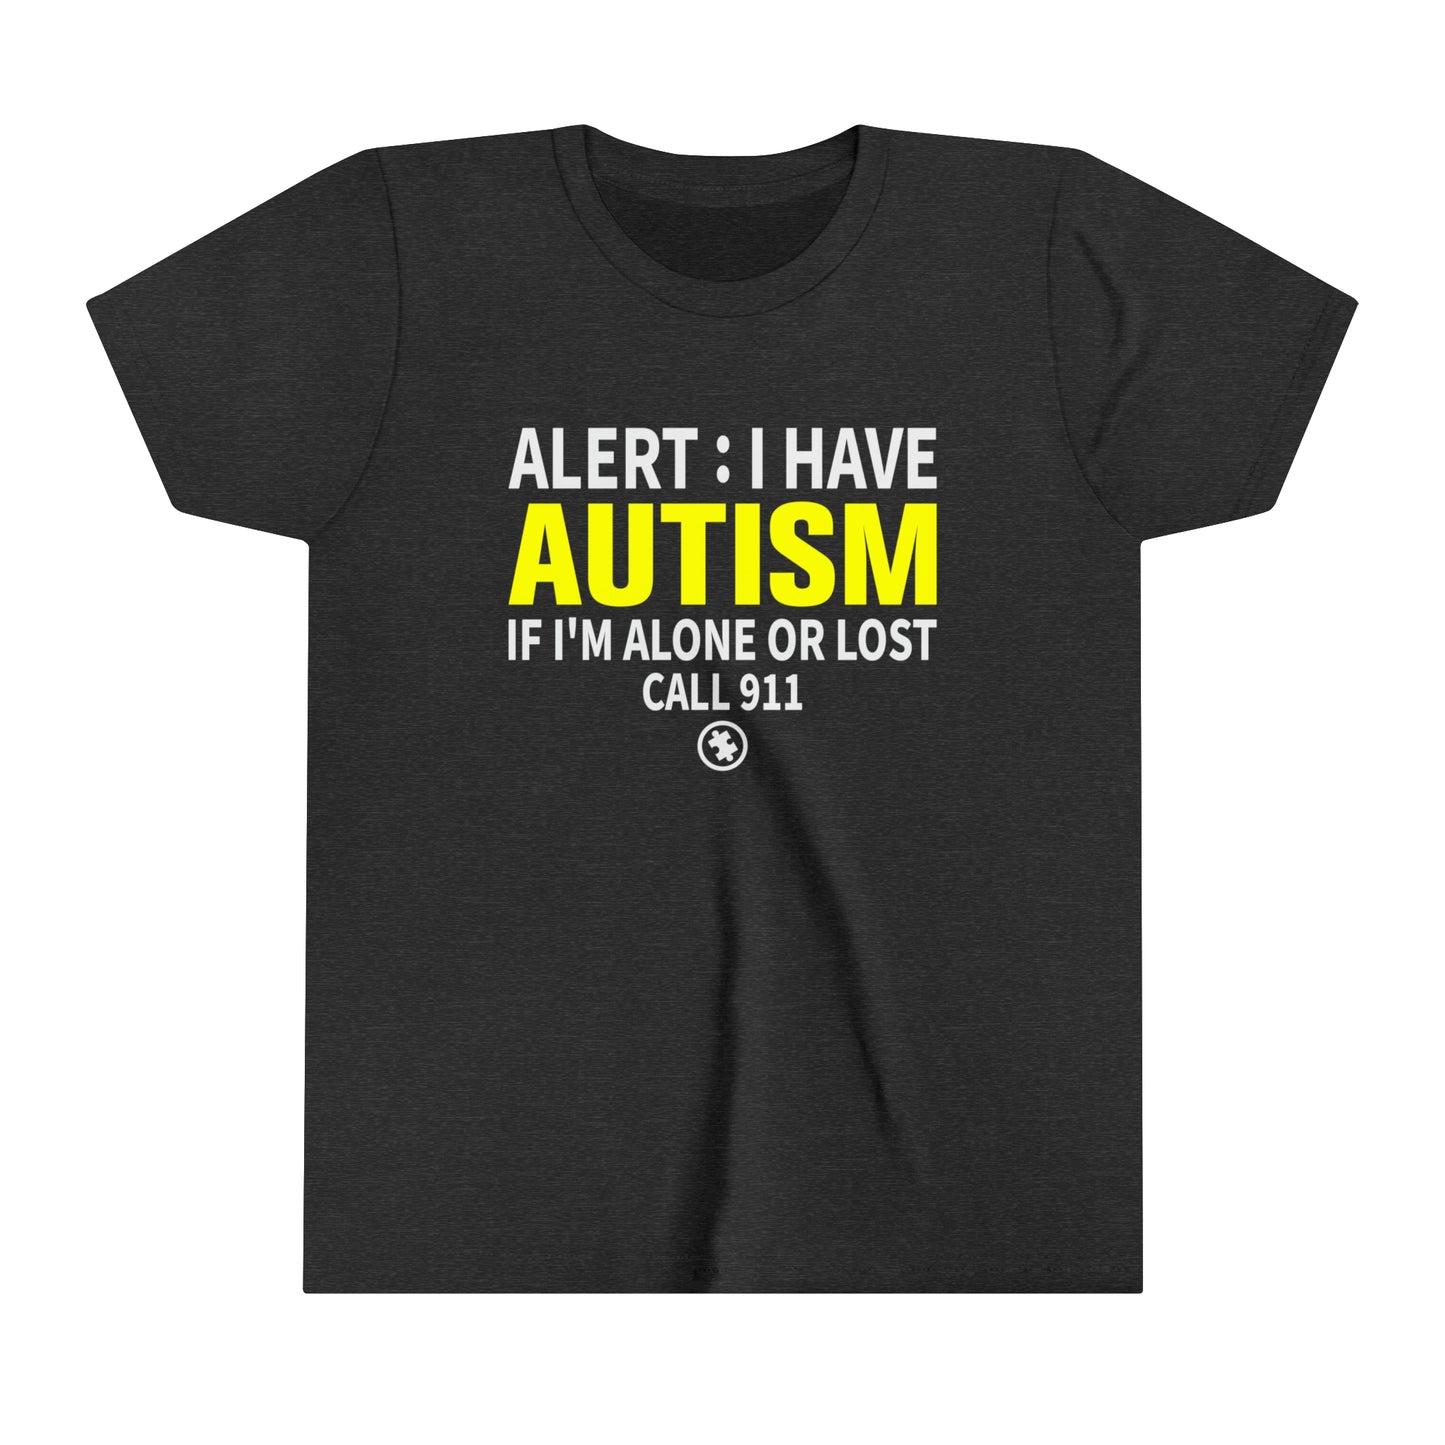 Autism Emergency Response Shirt Autism Awareness Advocate Youth Shirt